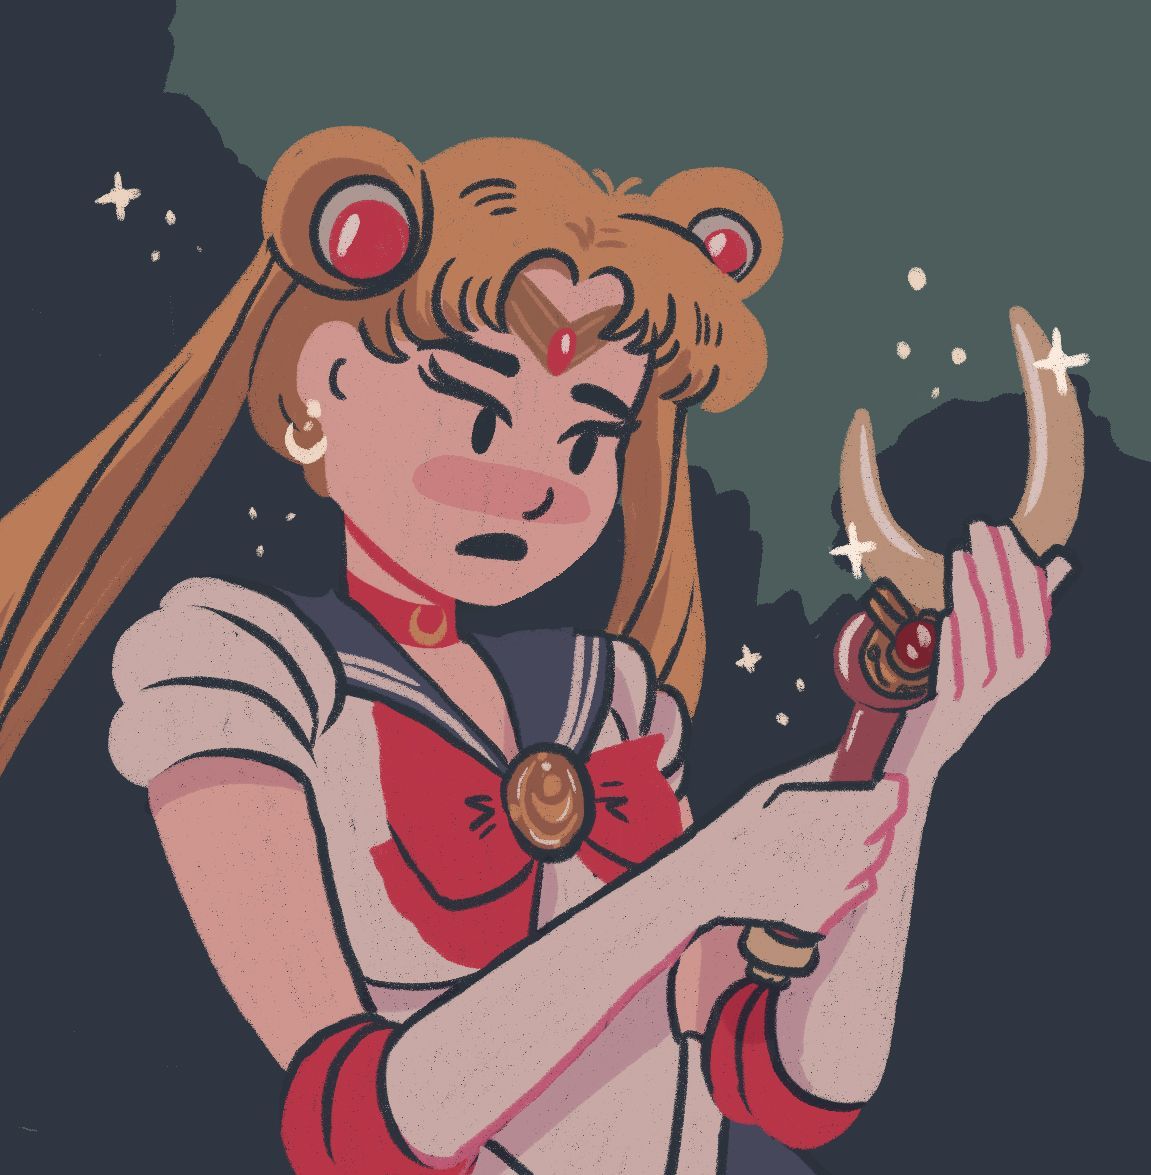 A cartoon character holding up an axe - Sailor Moon